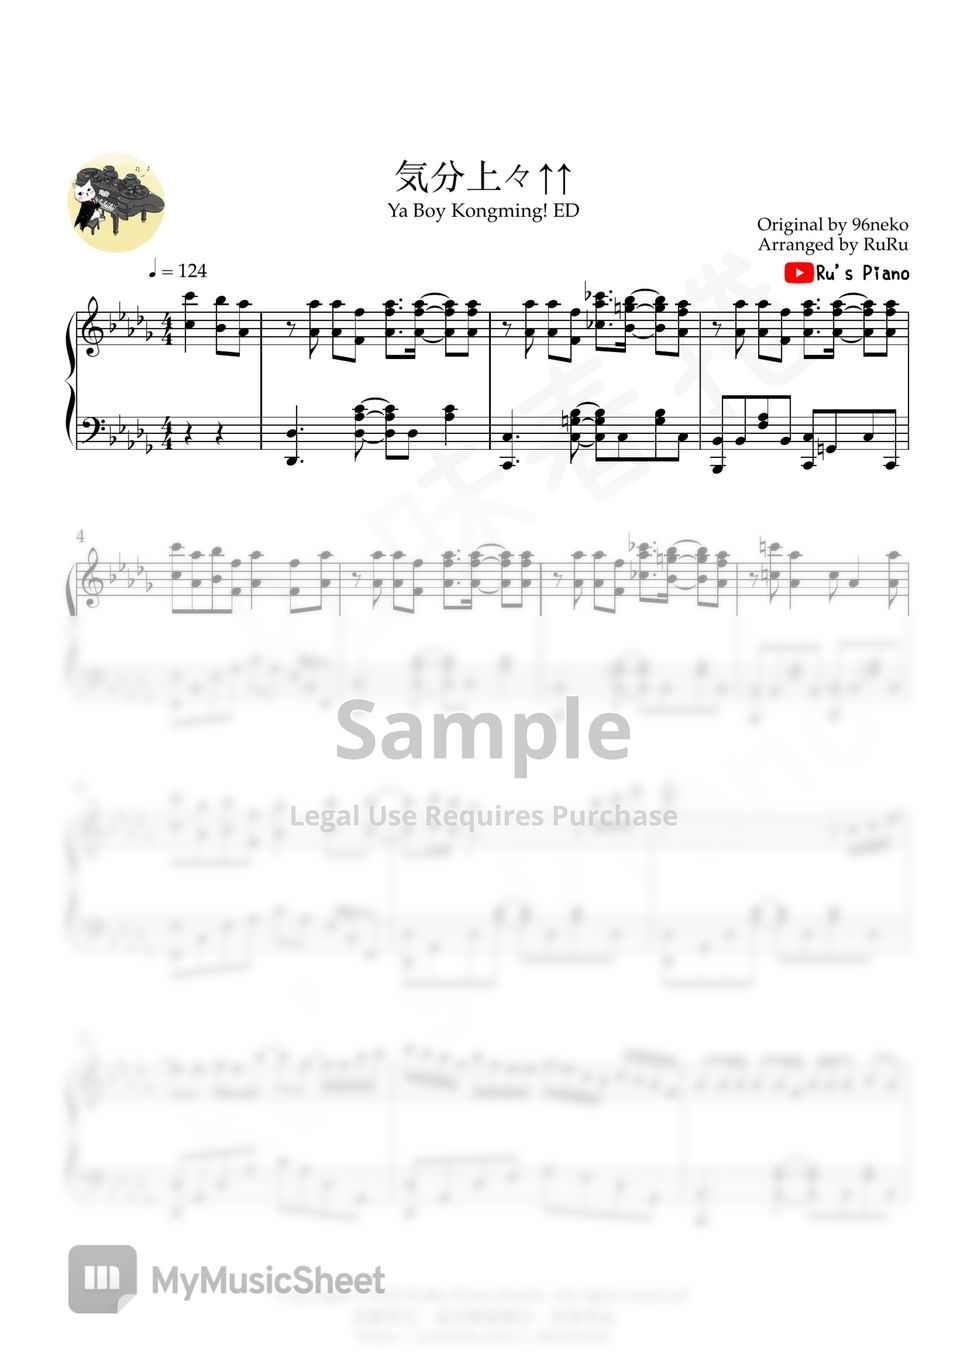 Ya Boy Kongming! ED - Kibun Joujou ↑↑ (1'30'' ver.) by Ru's Piano